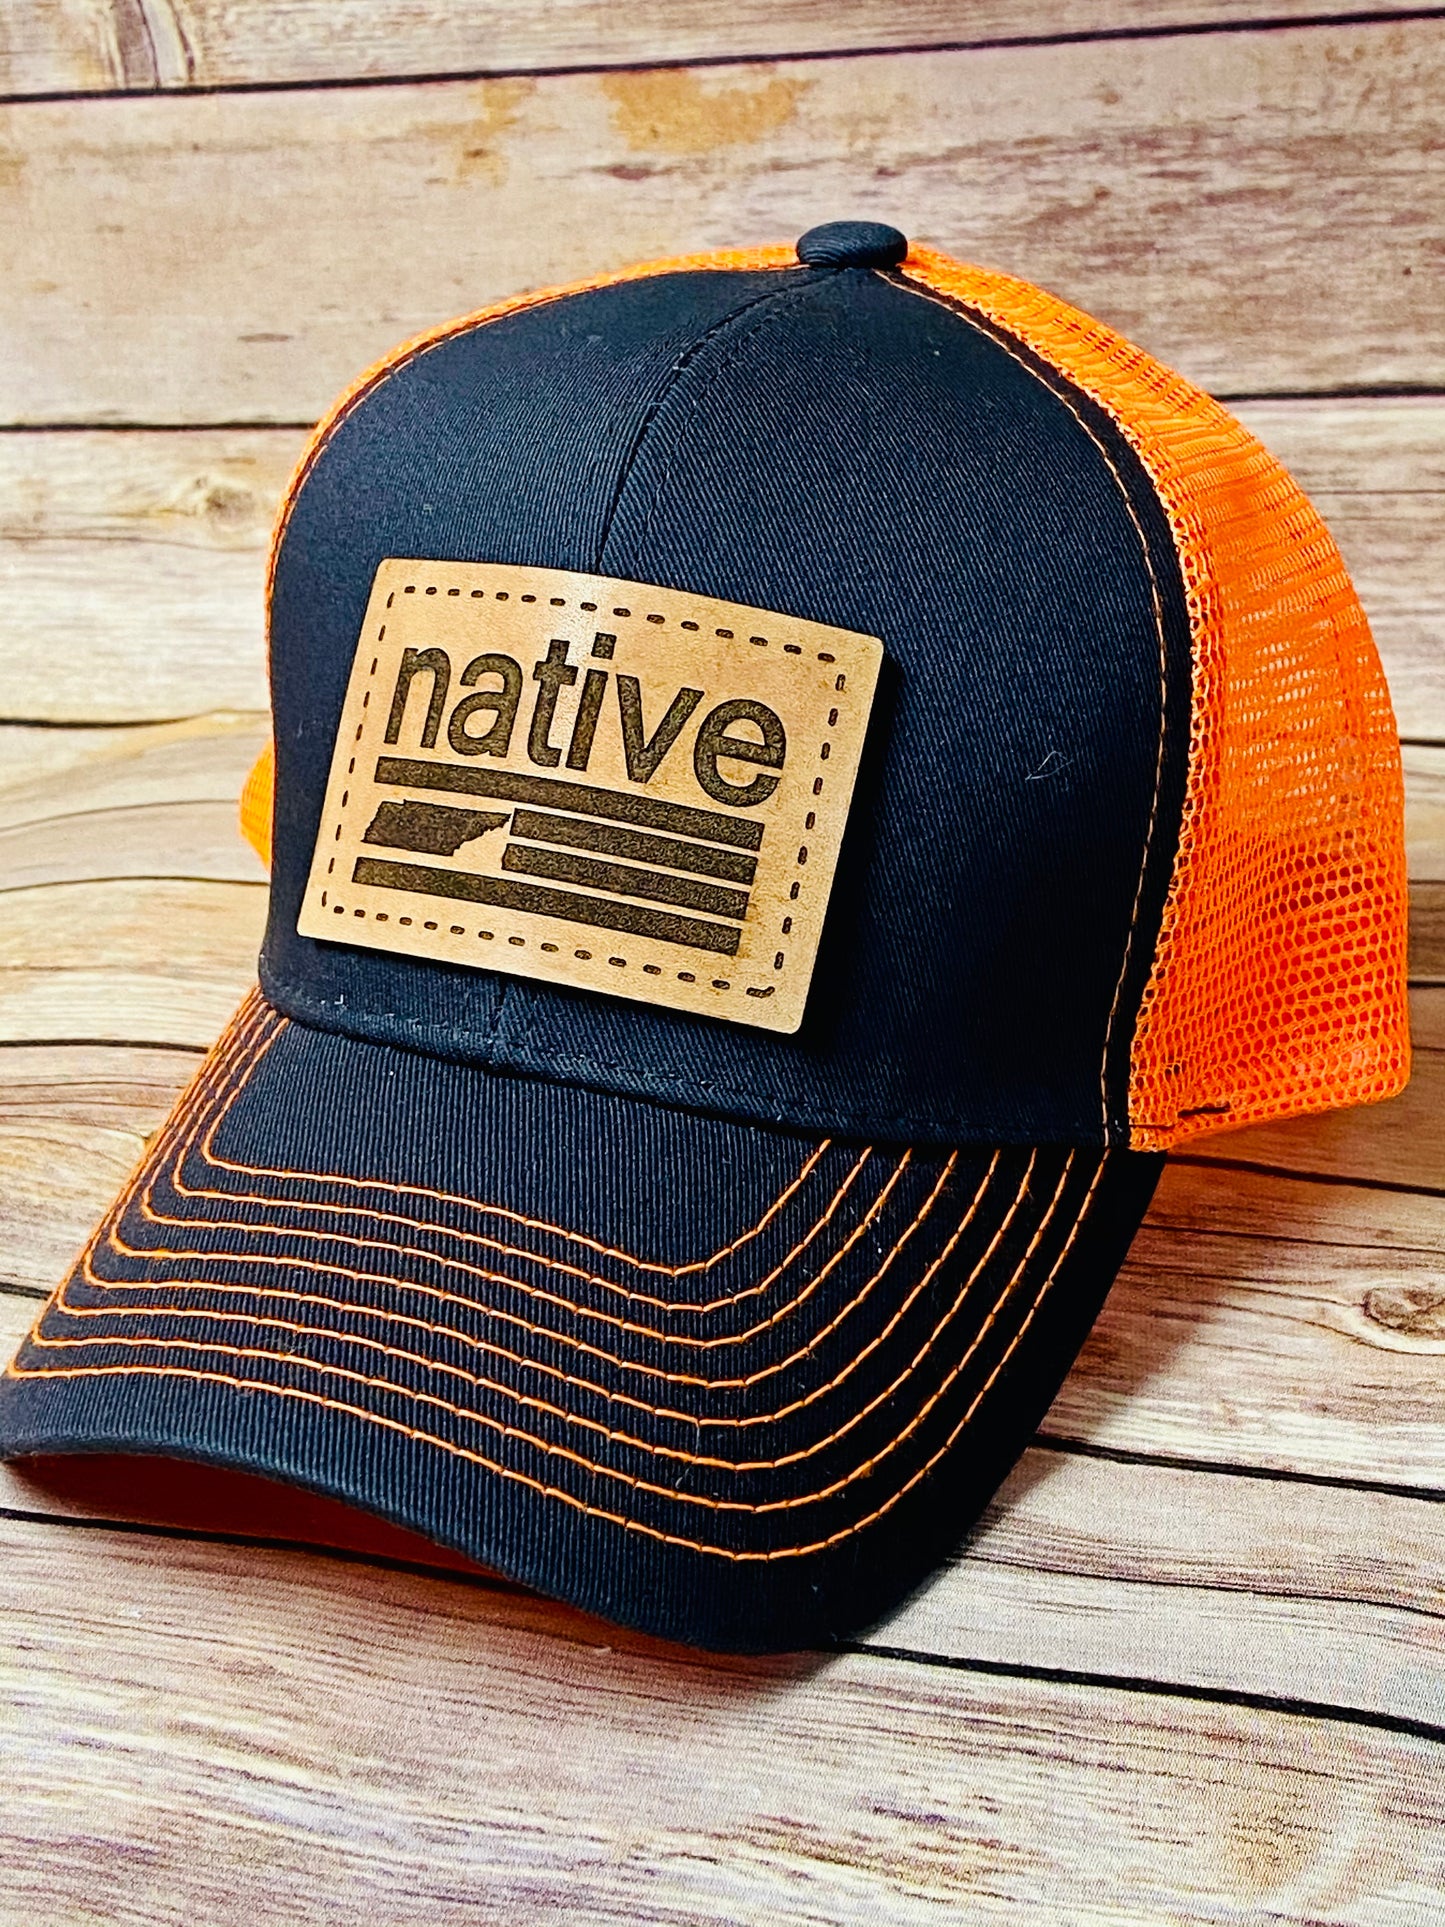 Native Tennessee Trucker Hat.